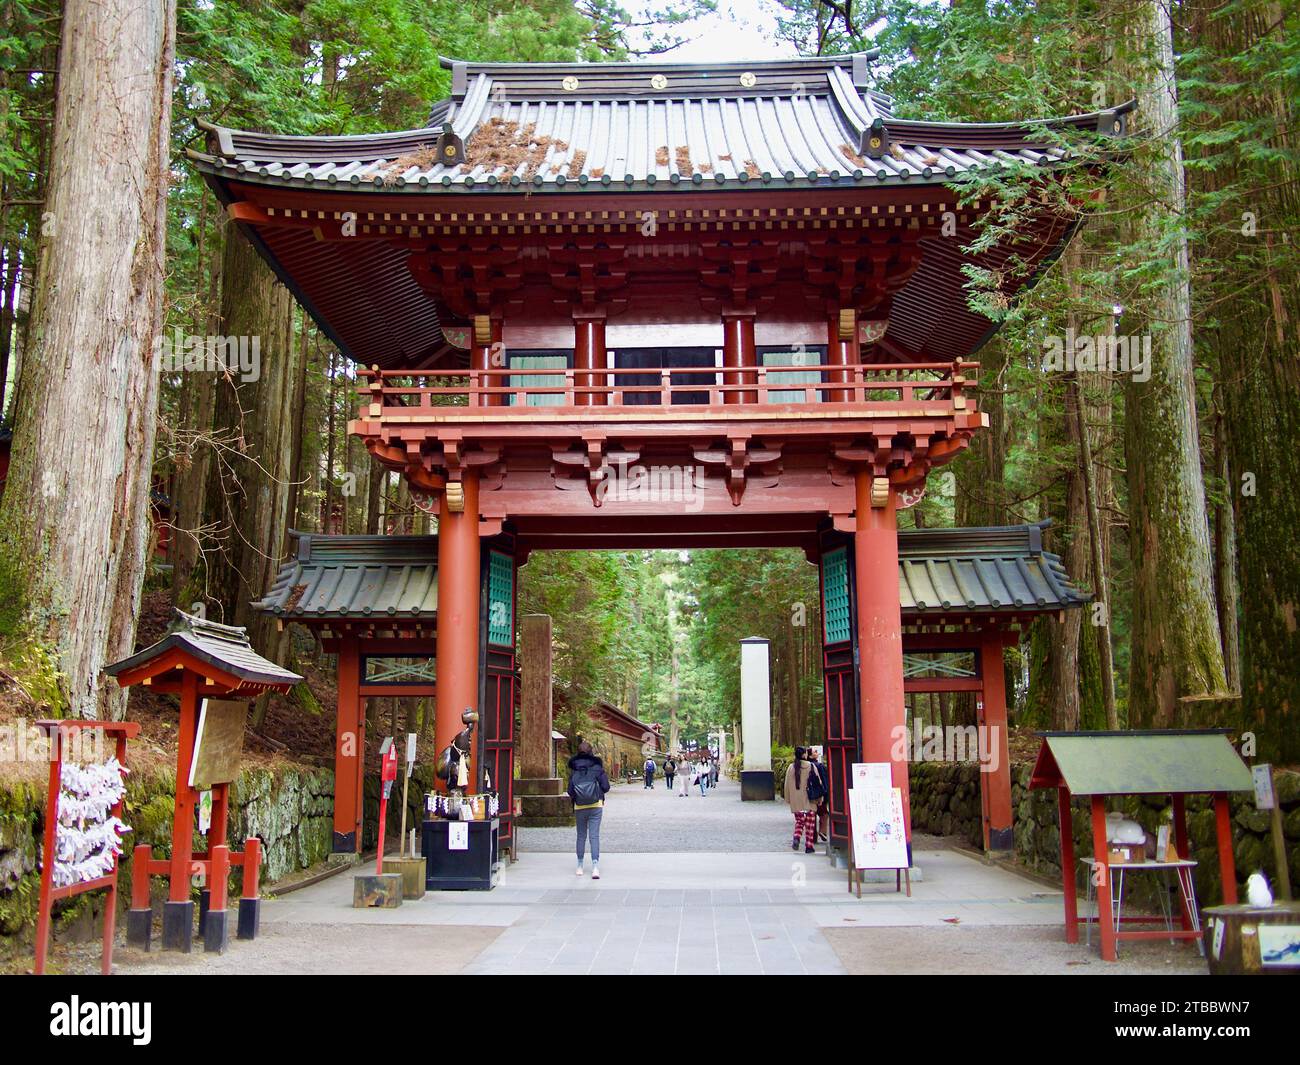 The main gate of Futarasan Jinja shrine in Nikko, Japan. This shrine was founded in 767 by Shodo Shonin. Stock Photo